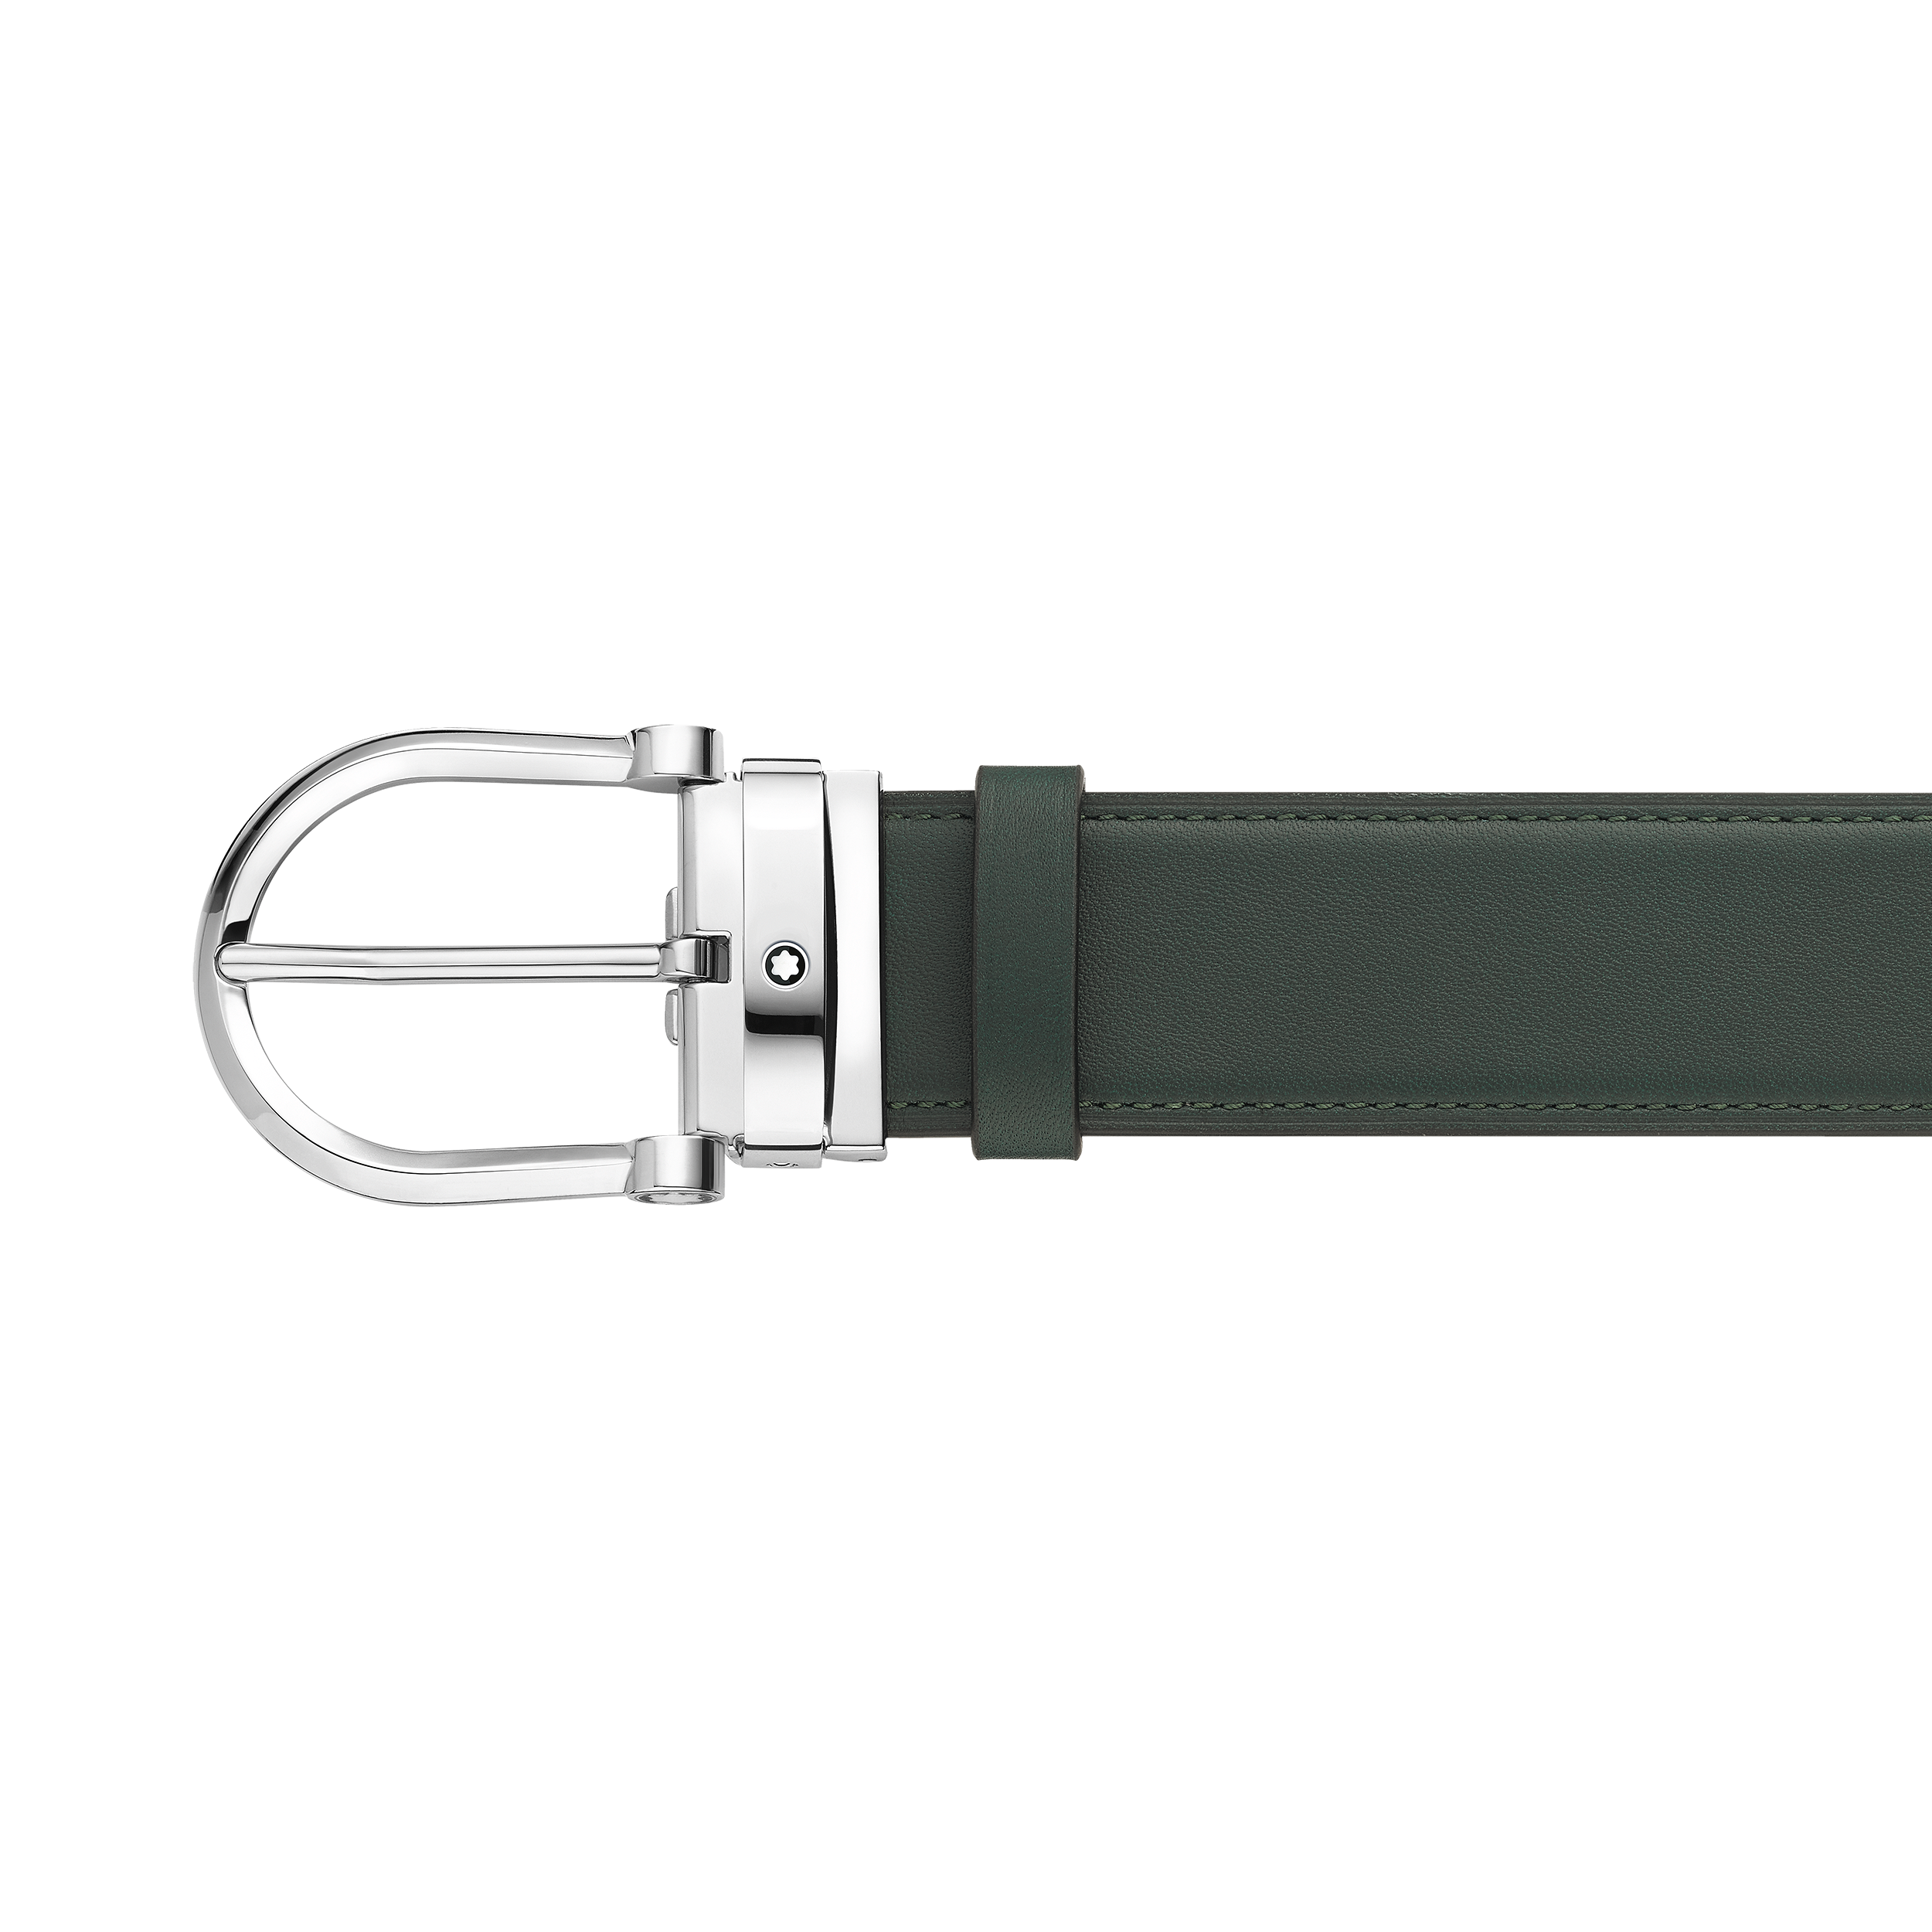 Horseshoe buckle green/tan 35 mm reversible leather belt, image 2